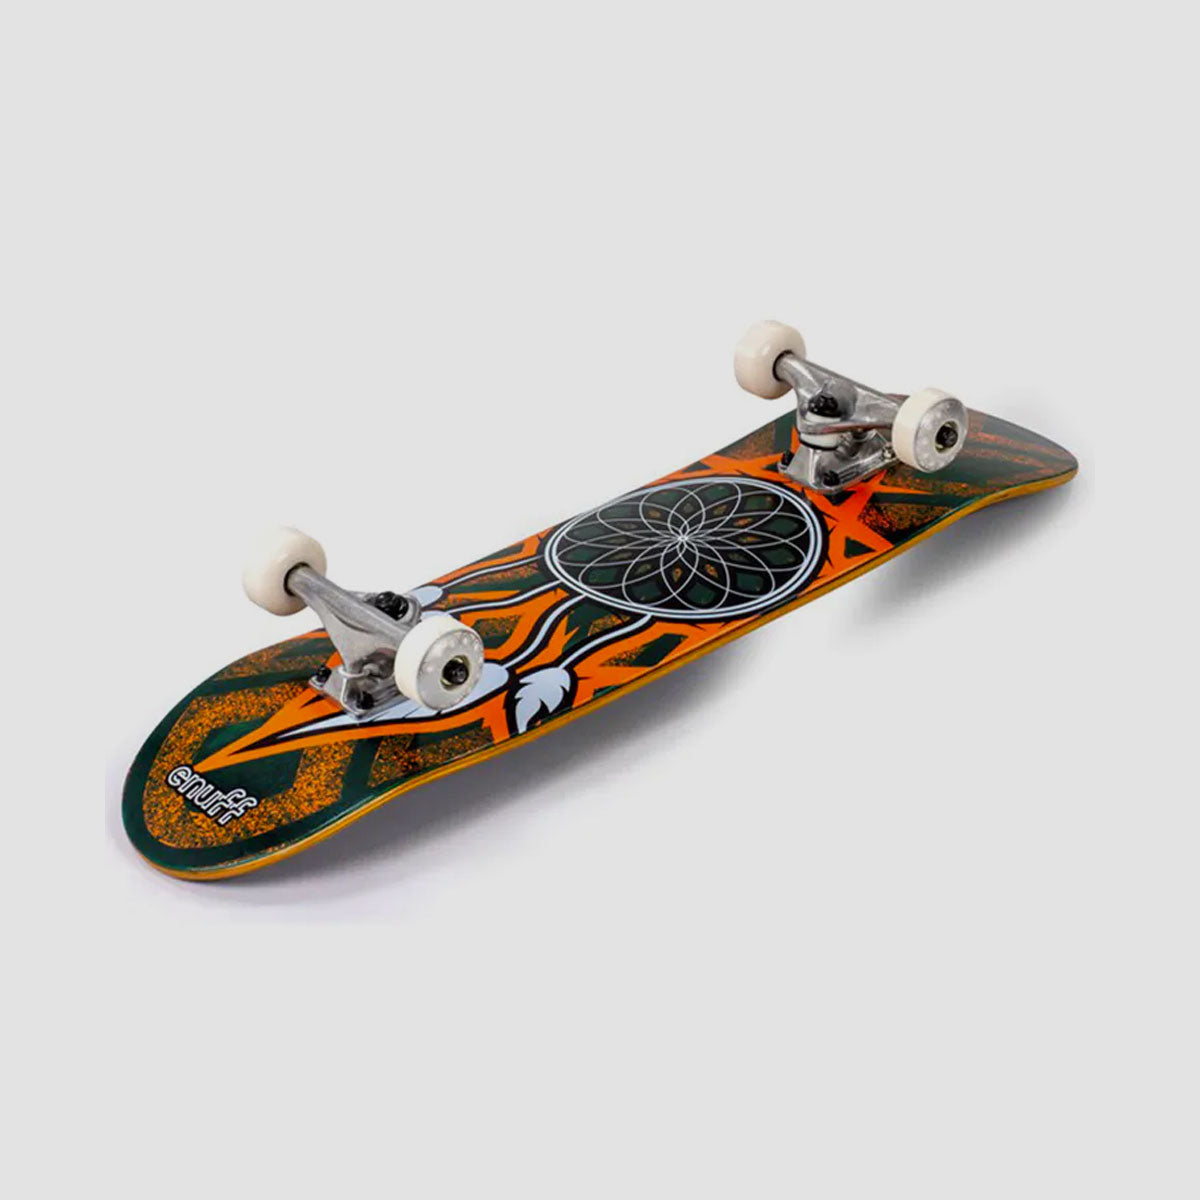 Enuff Dreamcatcher Skateboard Teal/Orange - 7.75"